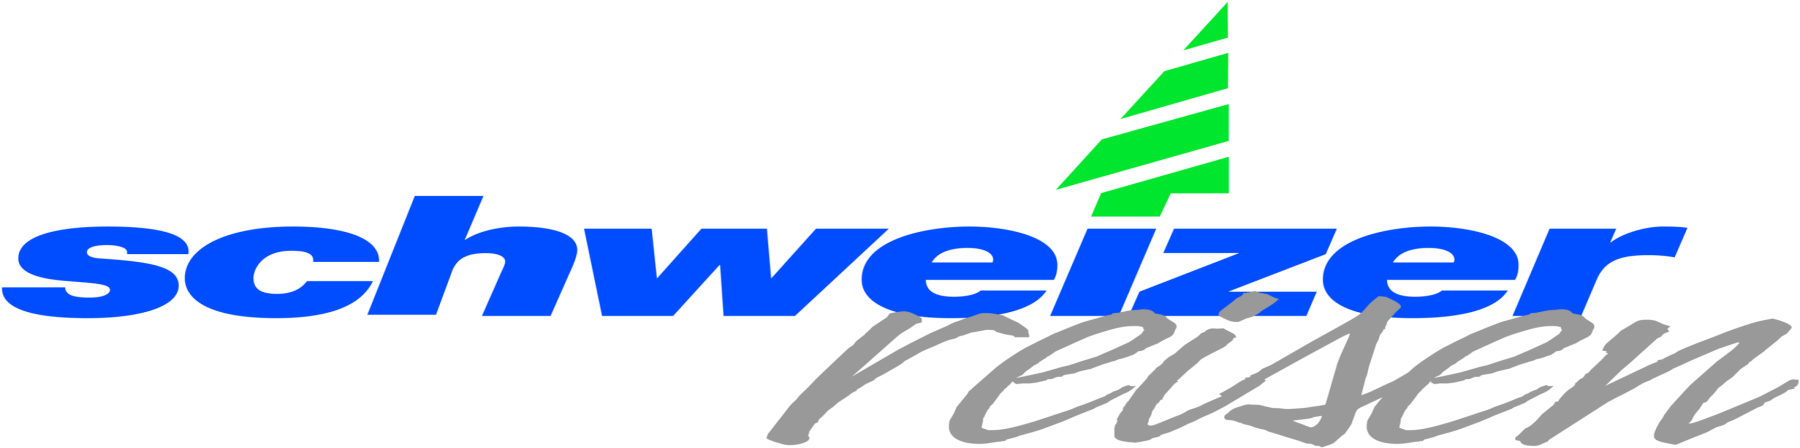 Schweizer-Logo-Reisen_4c-NEU-gross-schmaler